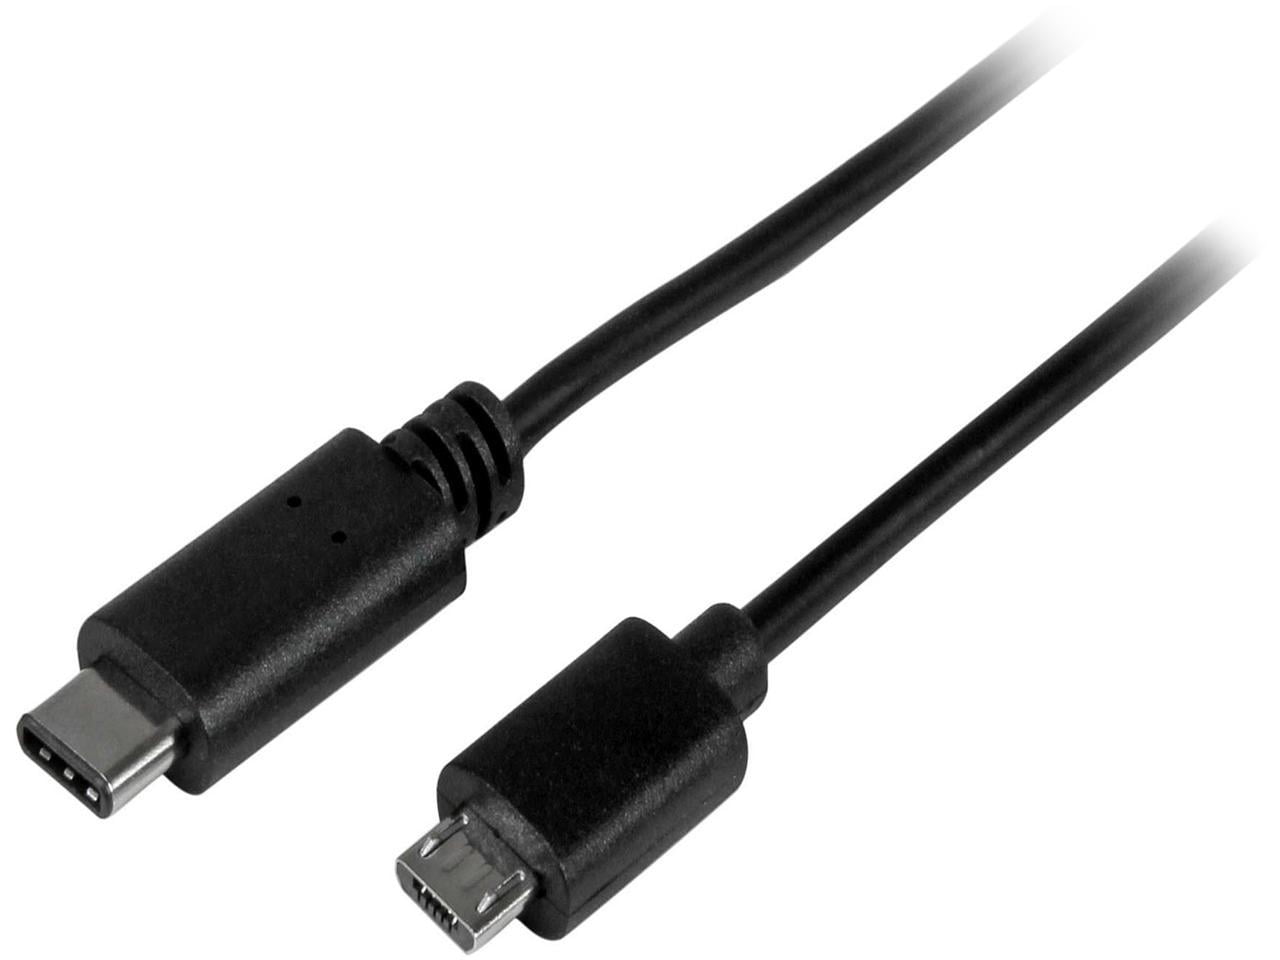 StarTech.com USB C to Micro USB Cable 2m 6ft - USB-C to Micro USB Charge  Cable - USB 2.0 Type C to Micro B - Thunderbolt 3 Compatible (USB2CUB2M) -  USB-C cable 